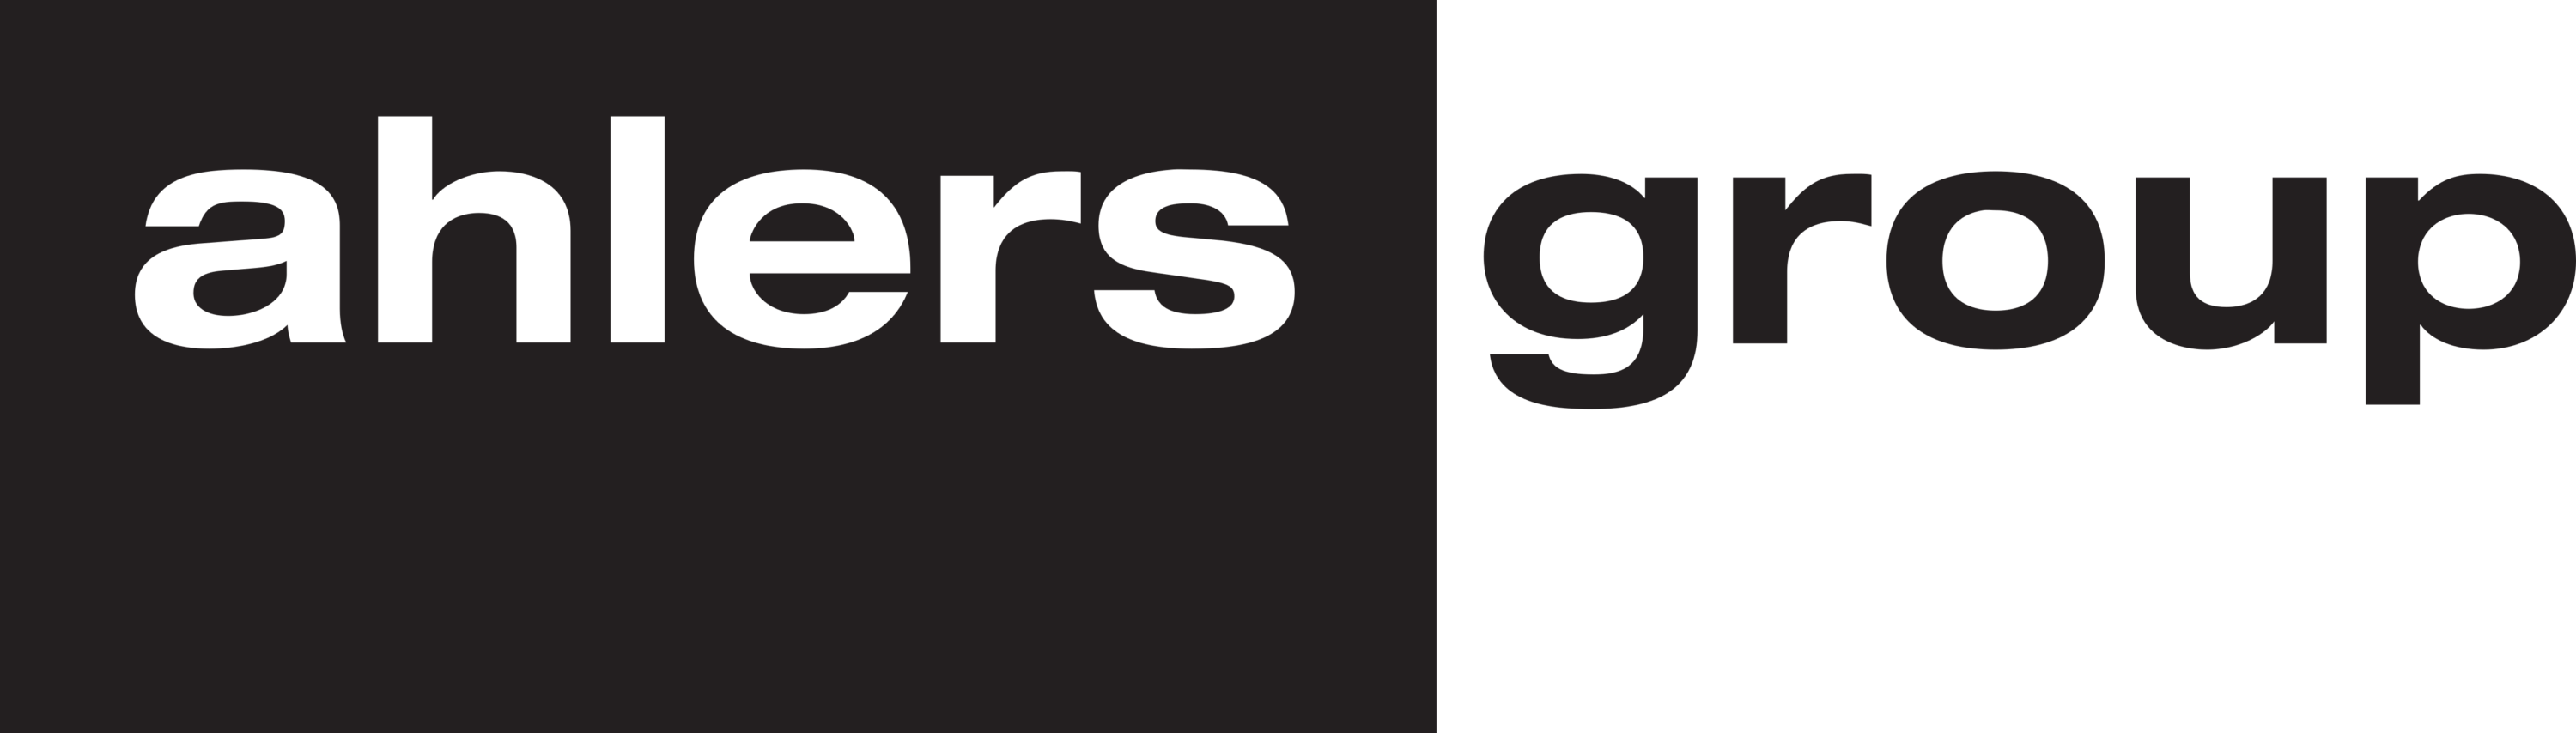 Ahlers AG Logo